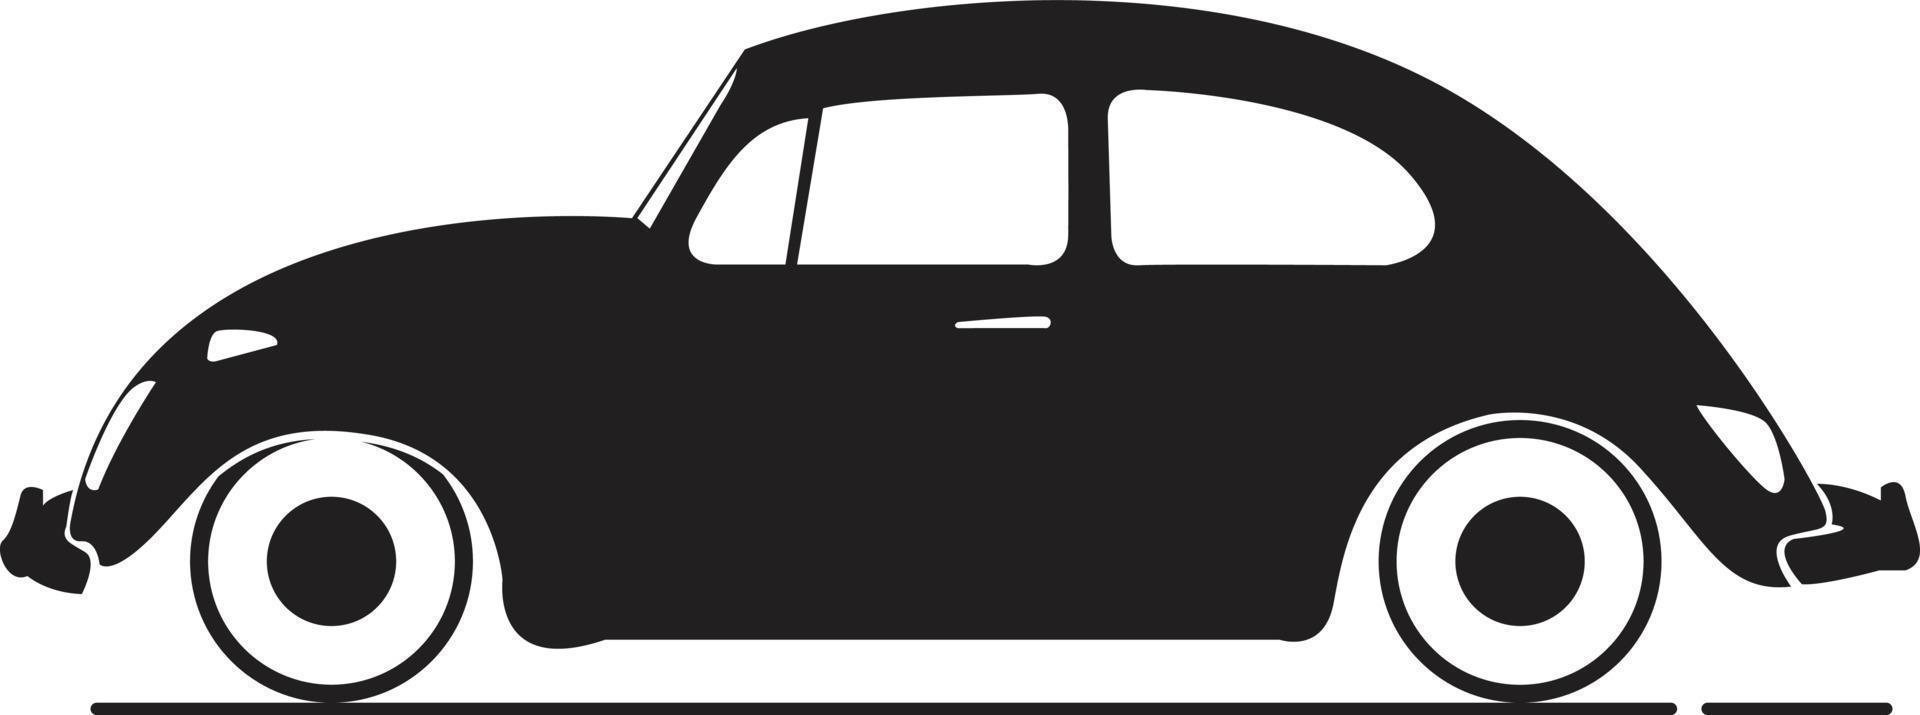 simple vintage and unique car silhouette vector